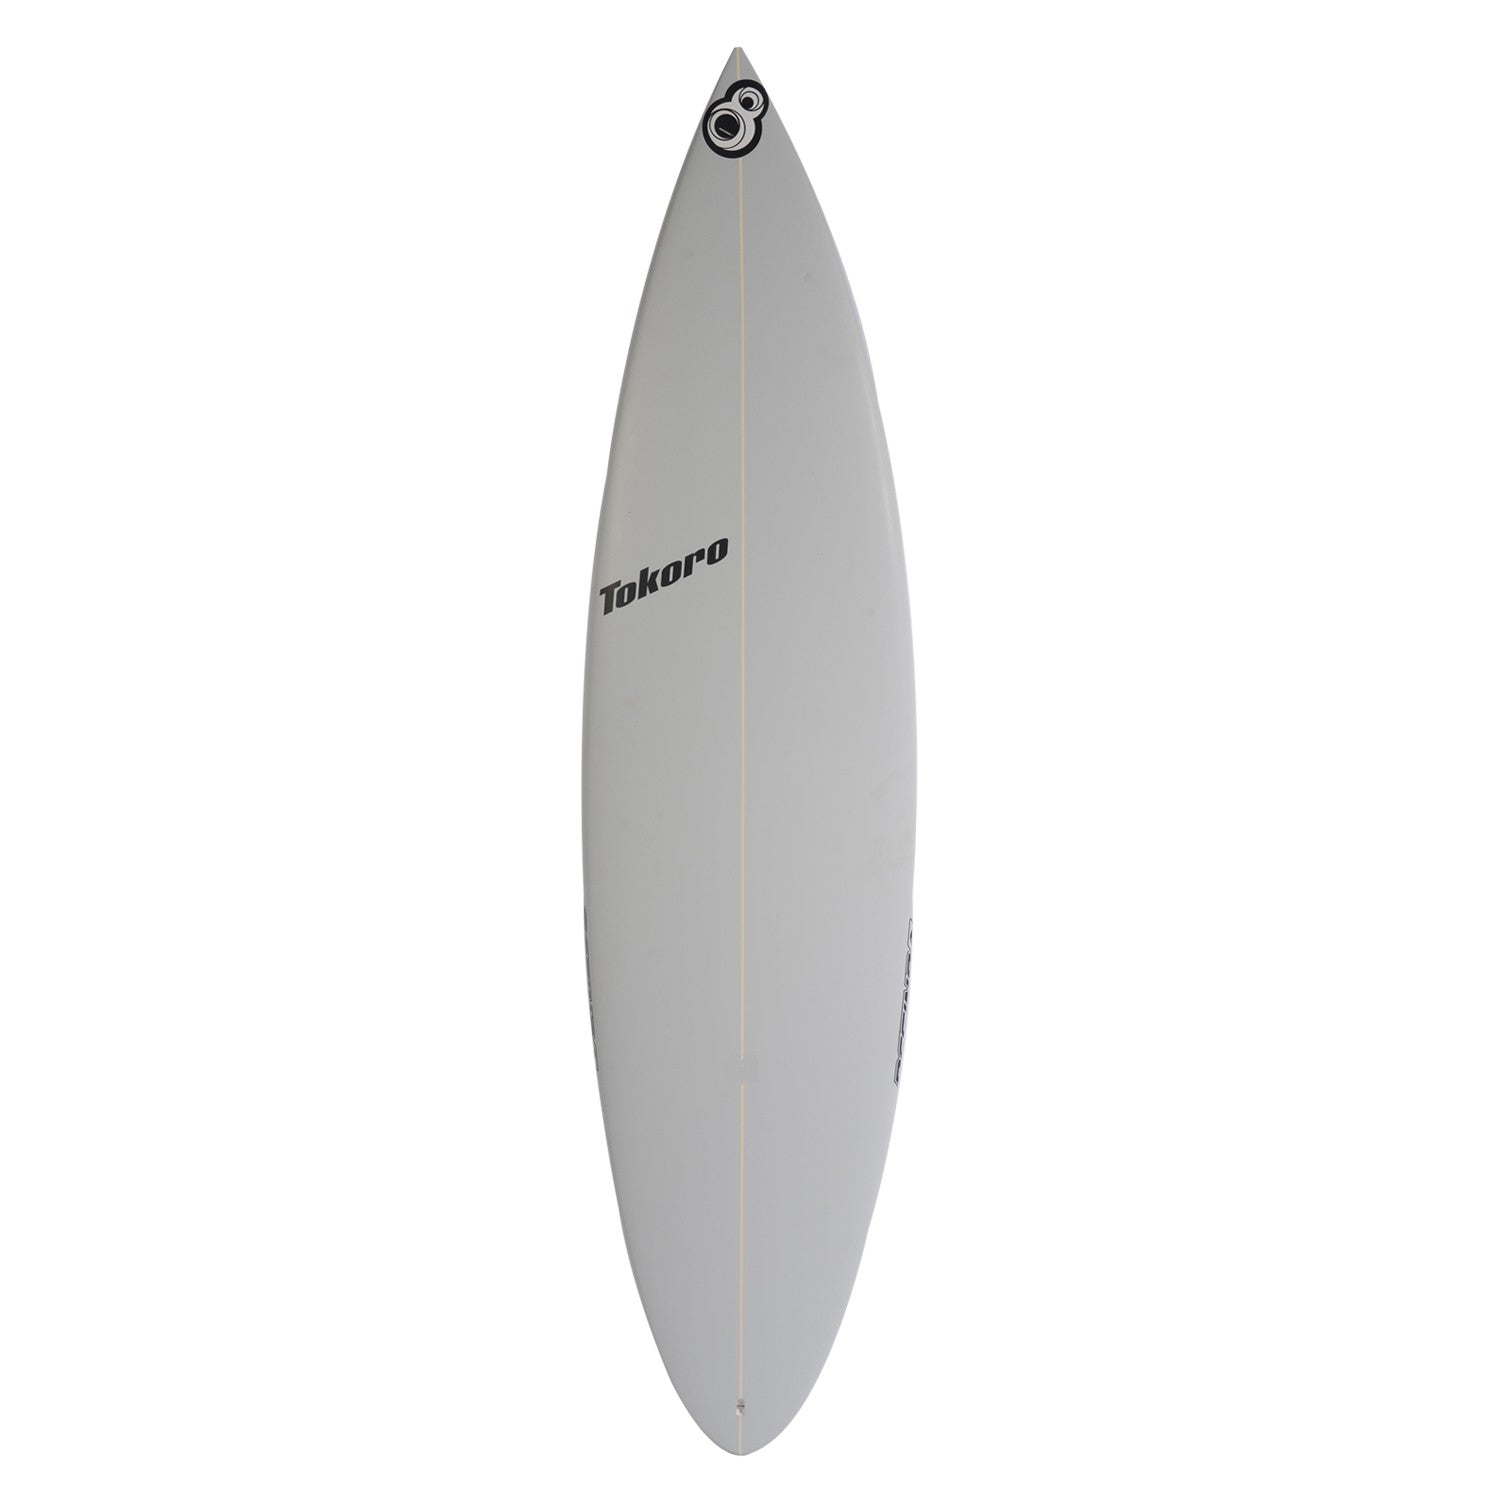 RESIN8 Wade Tokoro 6'8 surfboard (epoxy) - Gray